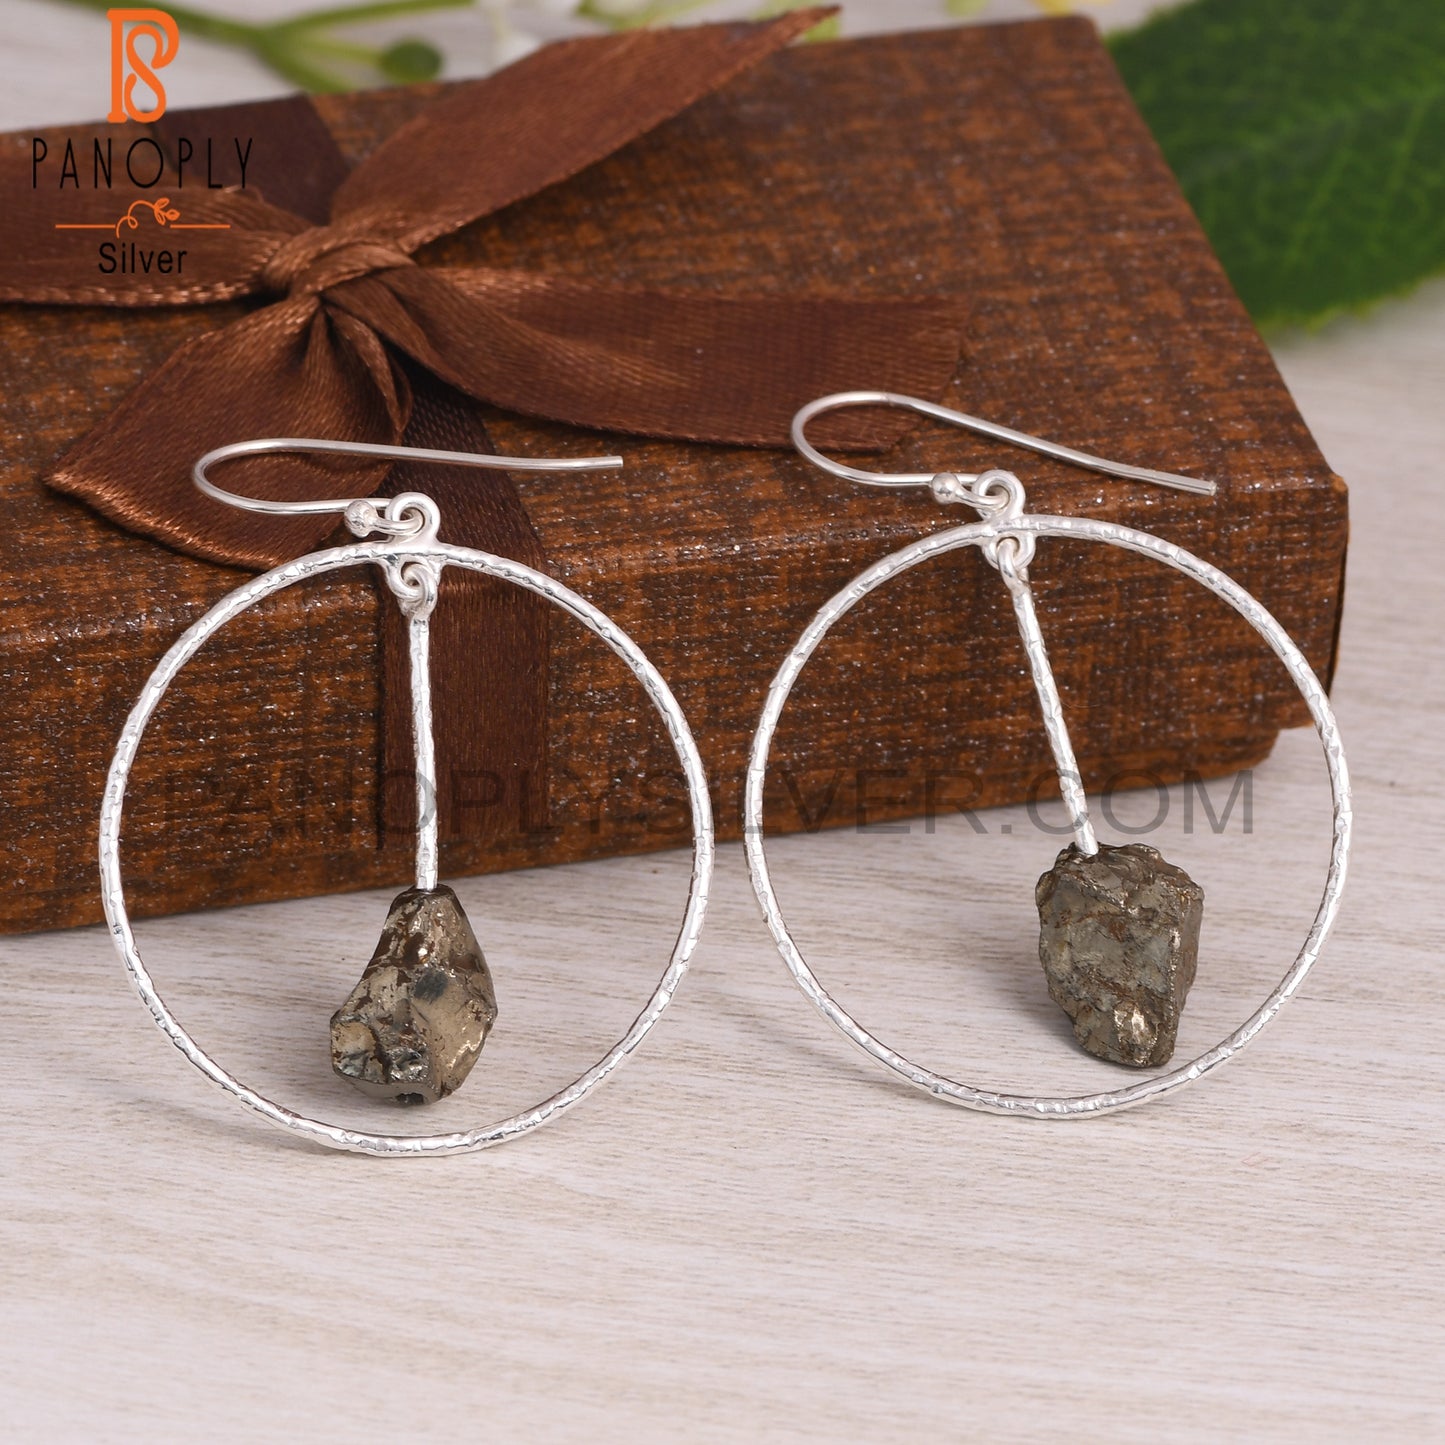 Pretty Pyrite Rough 925 Sterling Silver Dangle Earrings